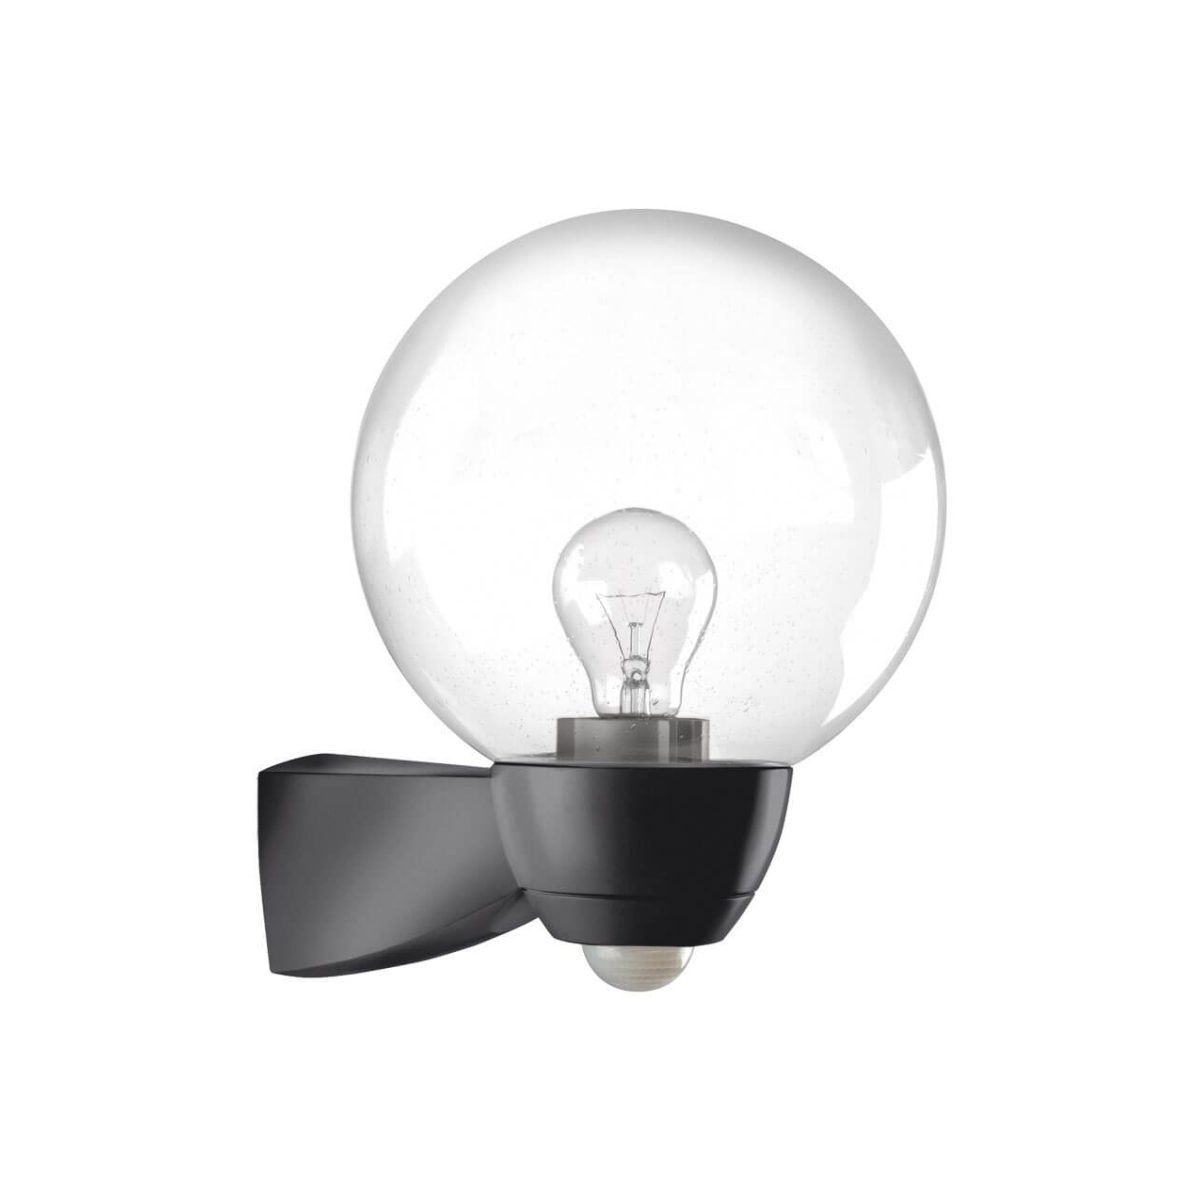 Lampenfassung für LED E27 Fadenlampen - 1m Nylon Kabel - Anthrazit